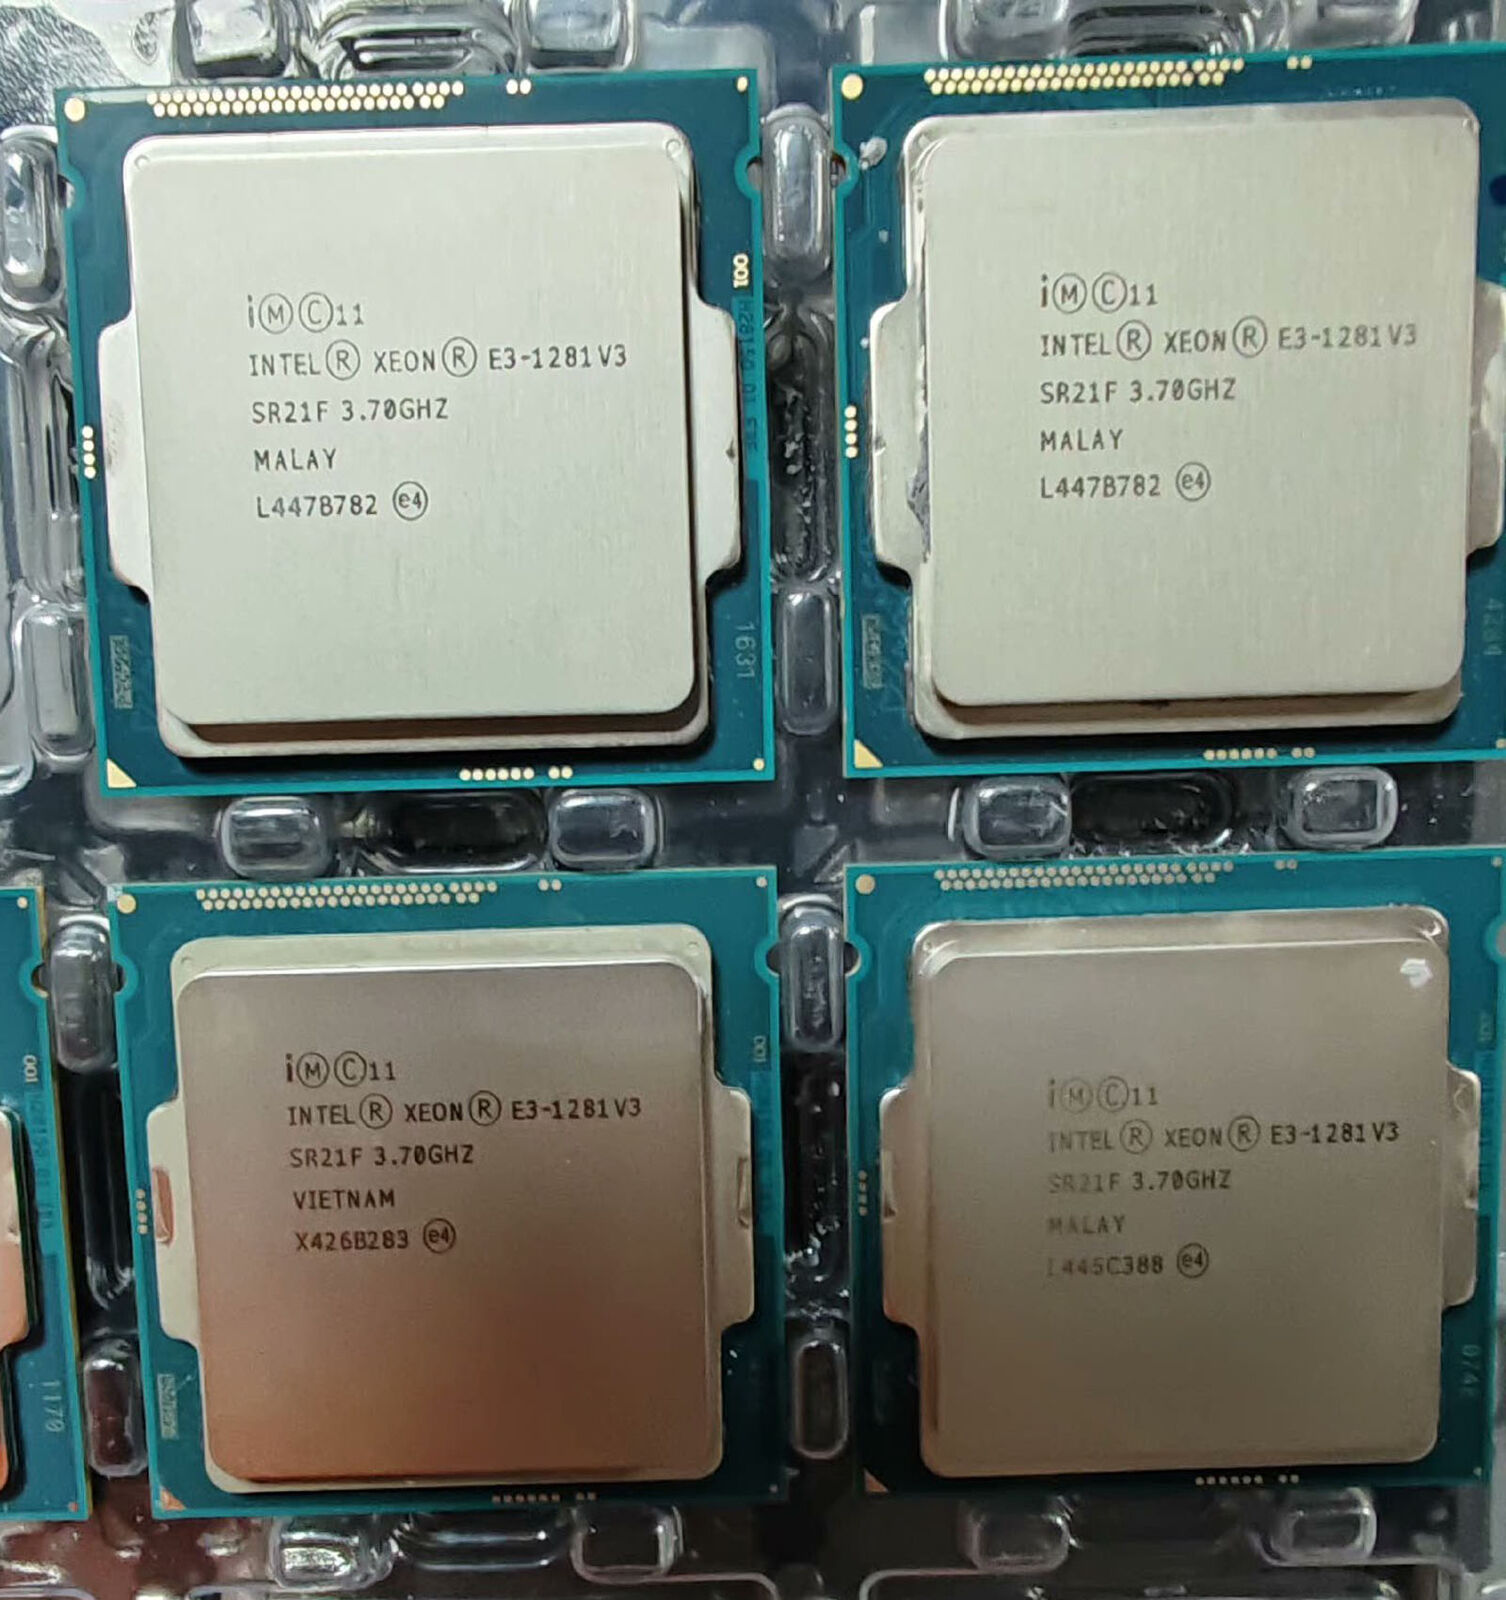 Intel Xeon E3-1281 V3 3.70GHz 4-core 8-thread 8MB 82W LGA1150 CPU processor